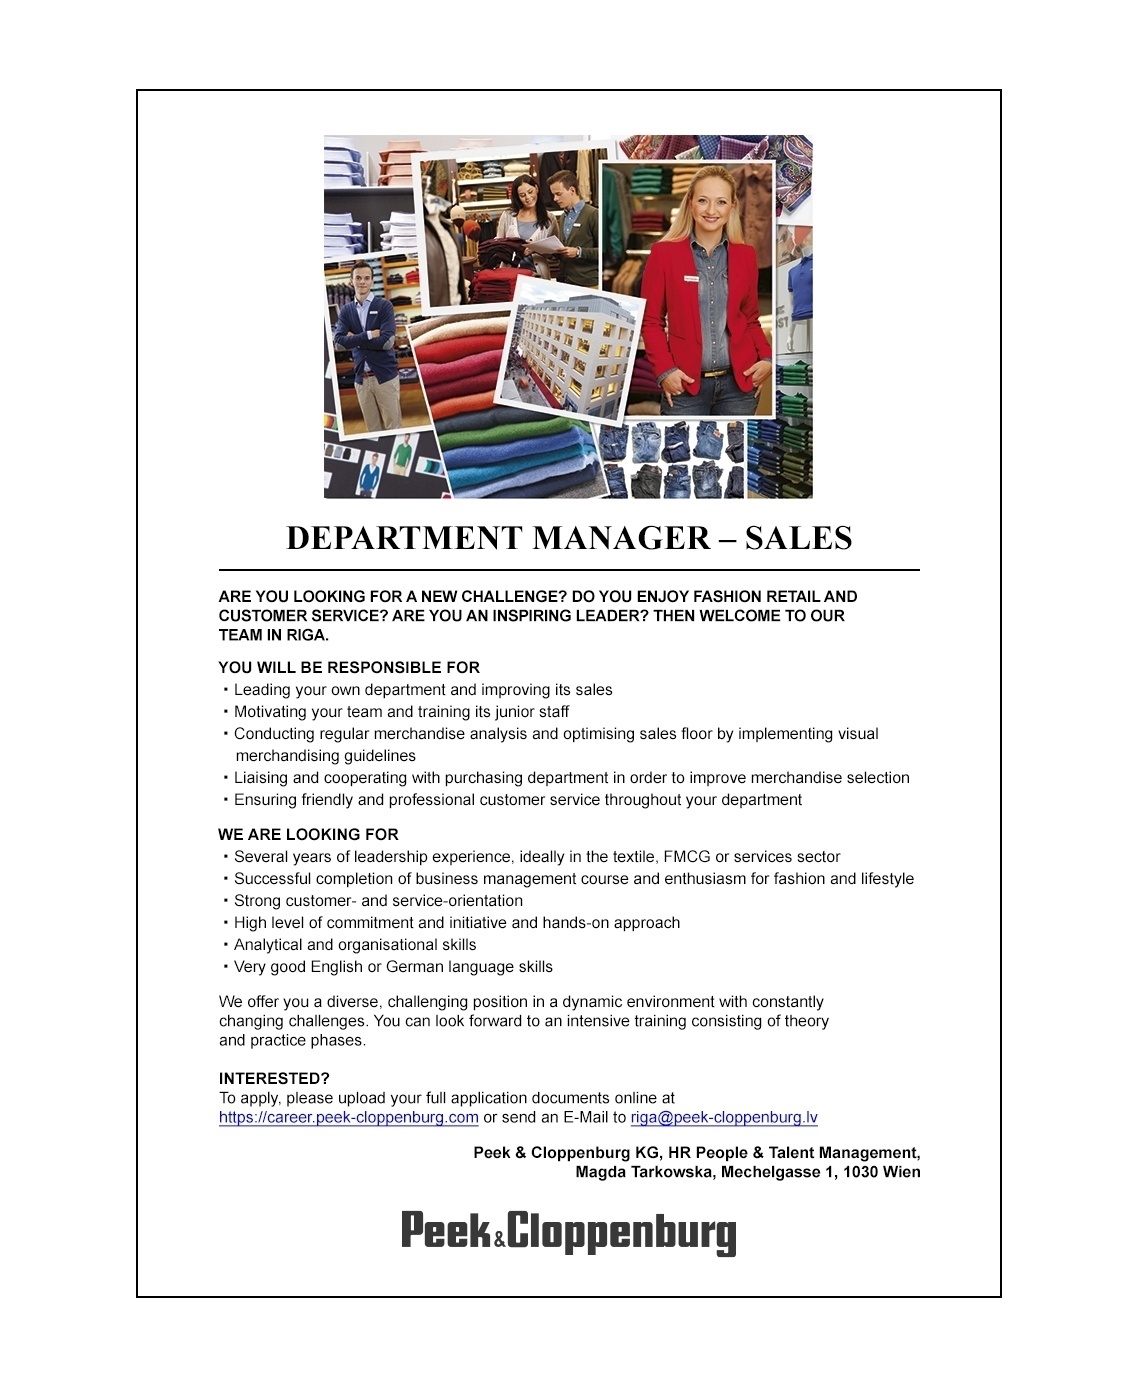 Peek & Cloppenburg, SIA Department Manager-Sales